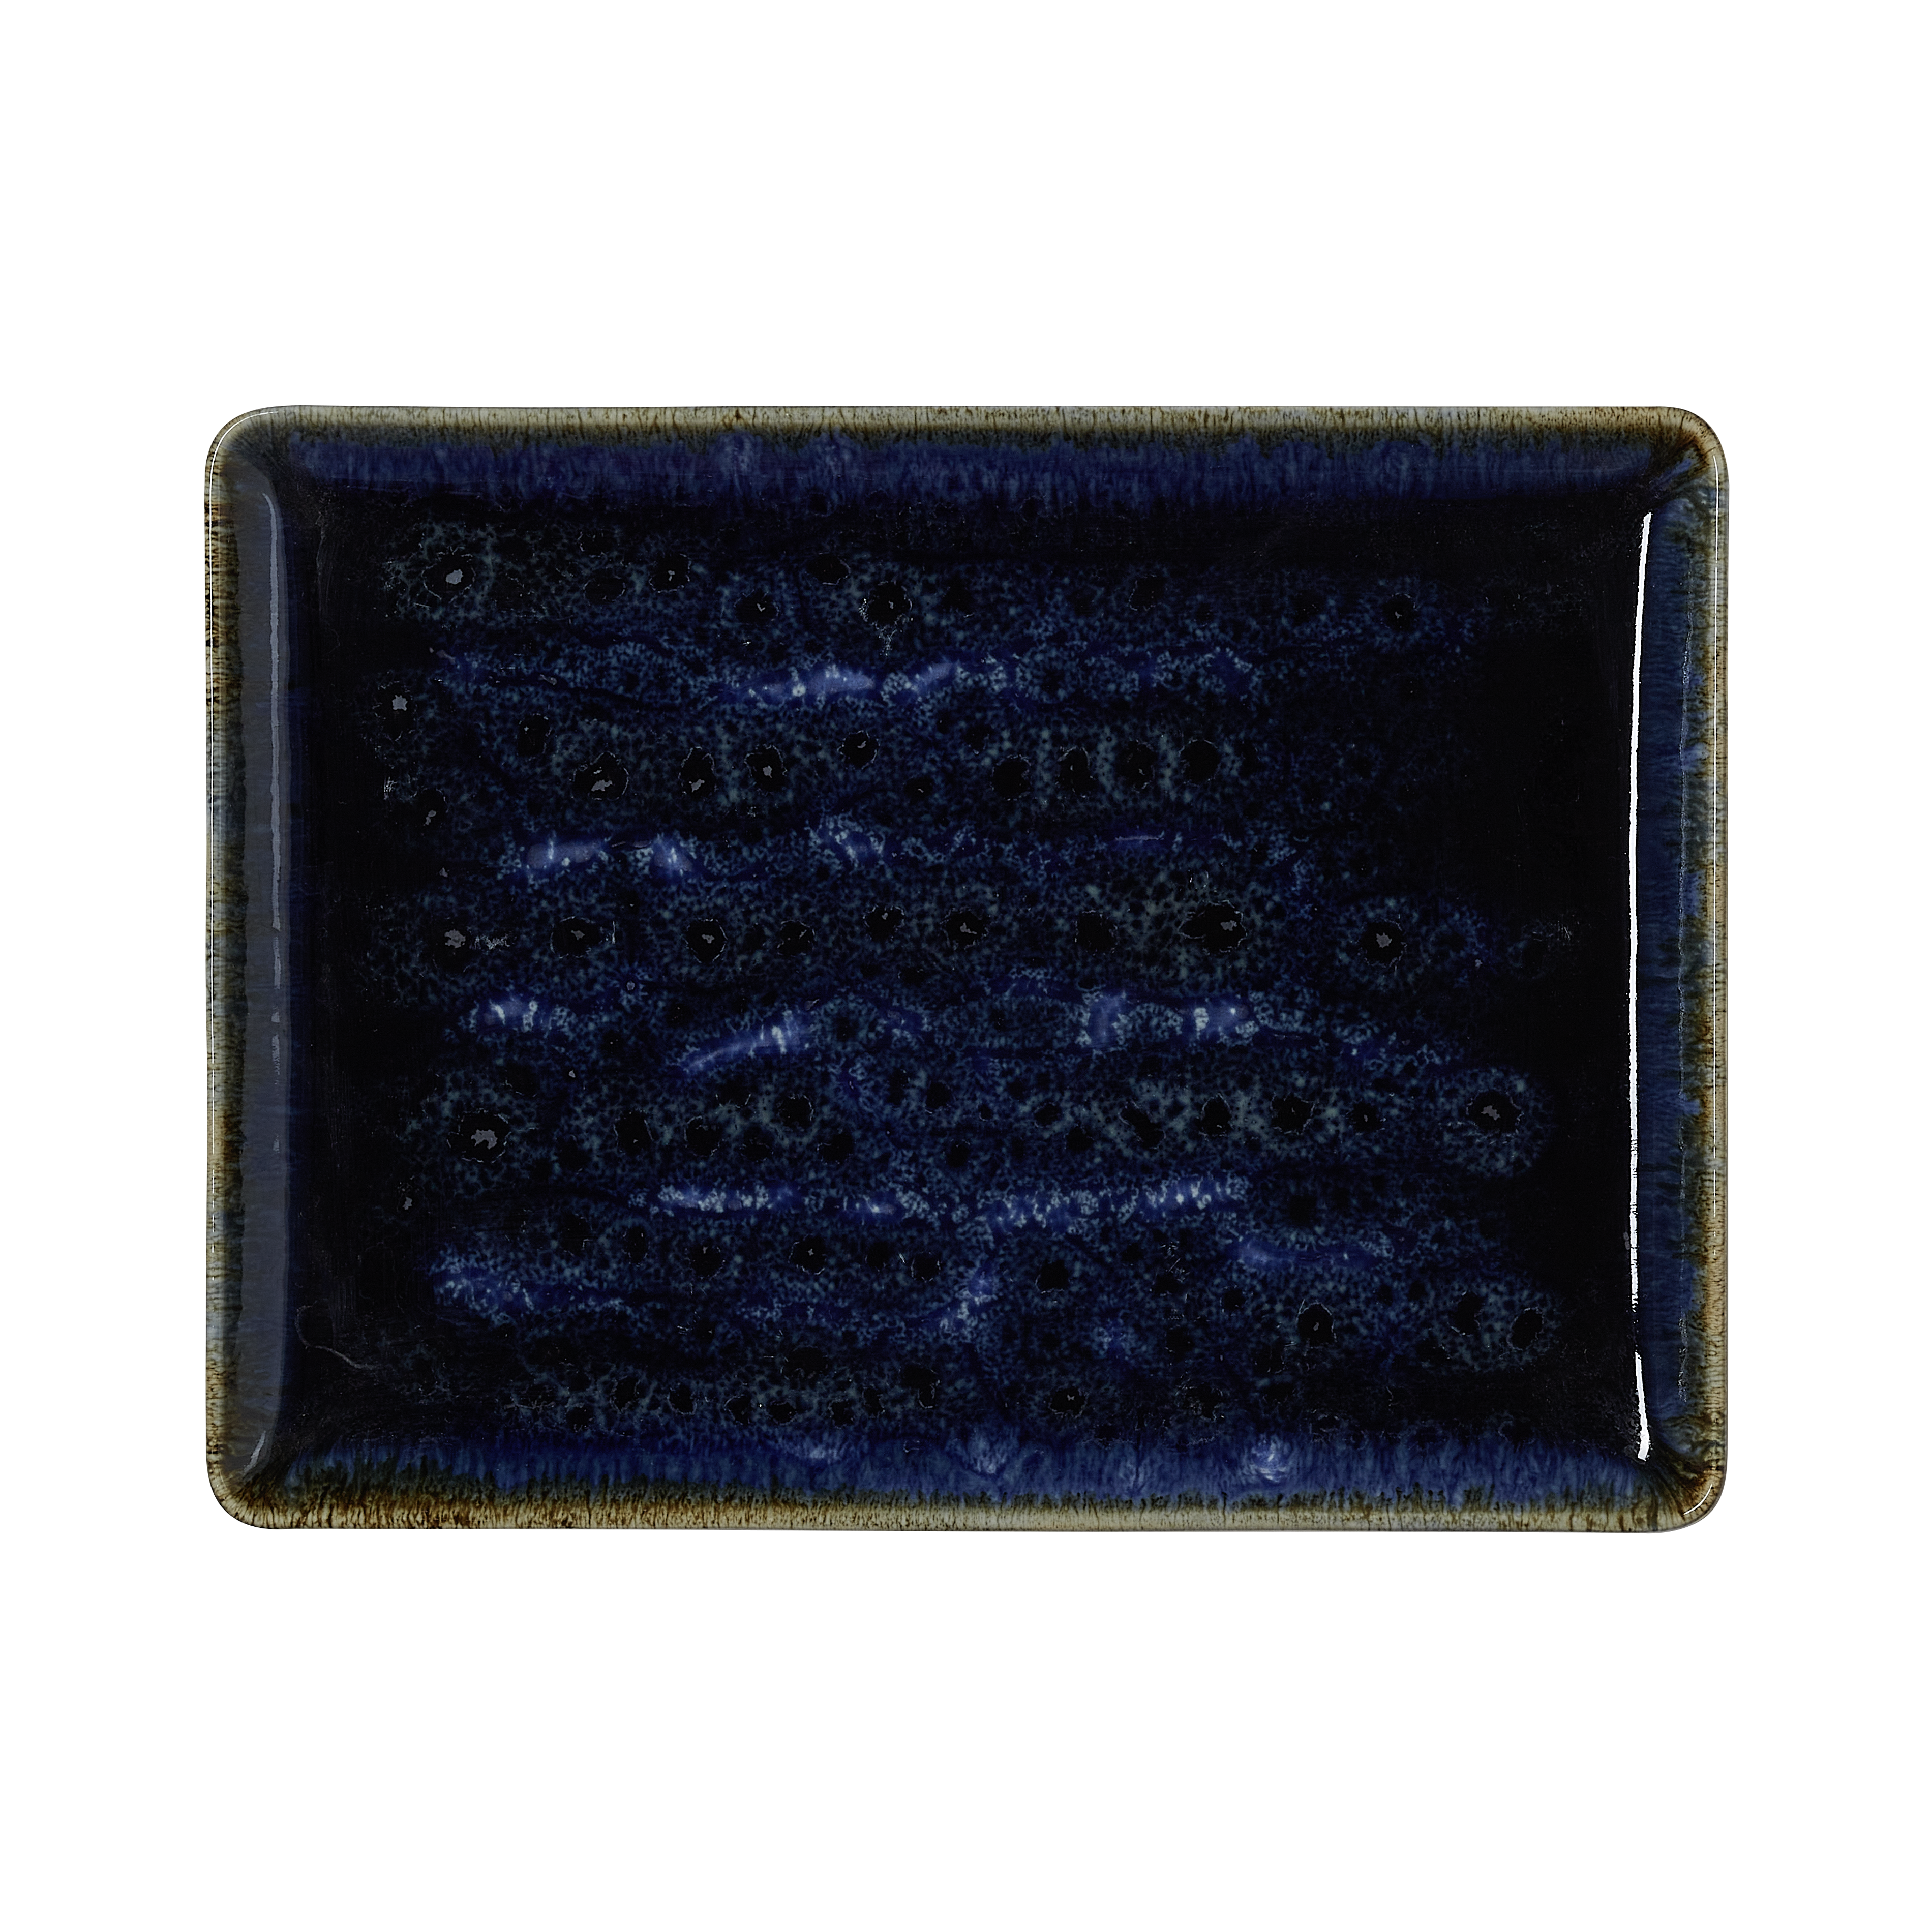 Teller, flach, 27 x 20 cm, Serie dark ocean, Porzellan